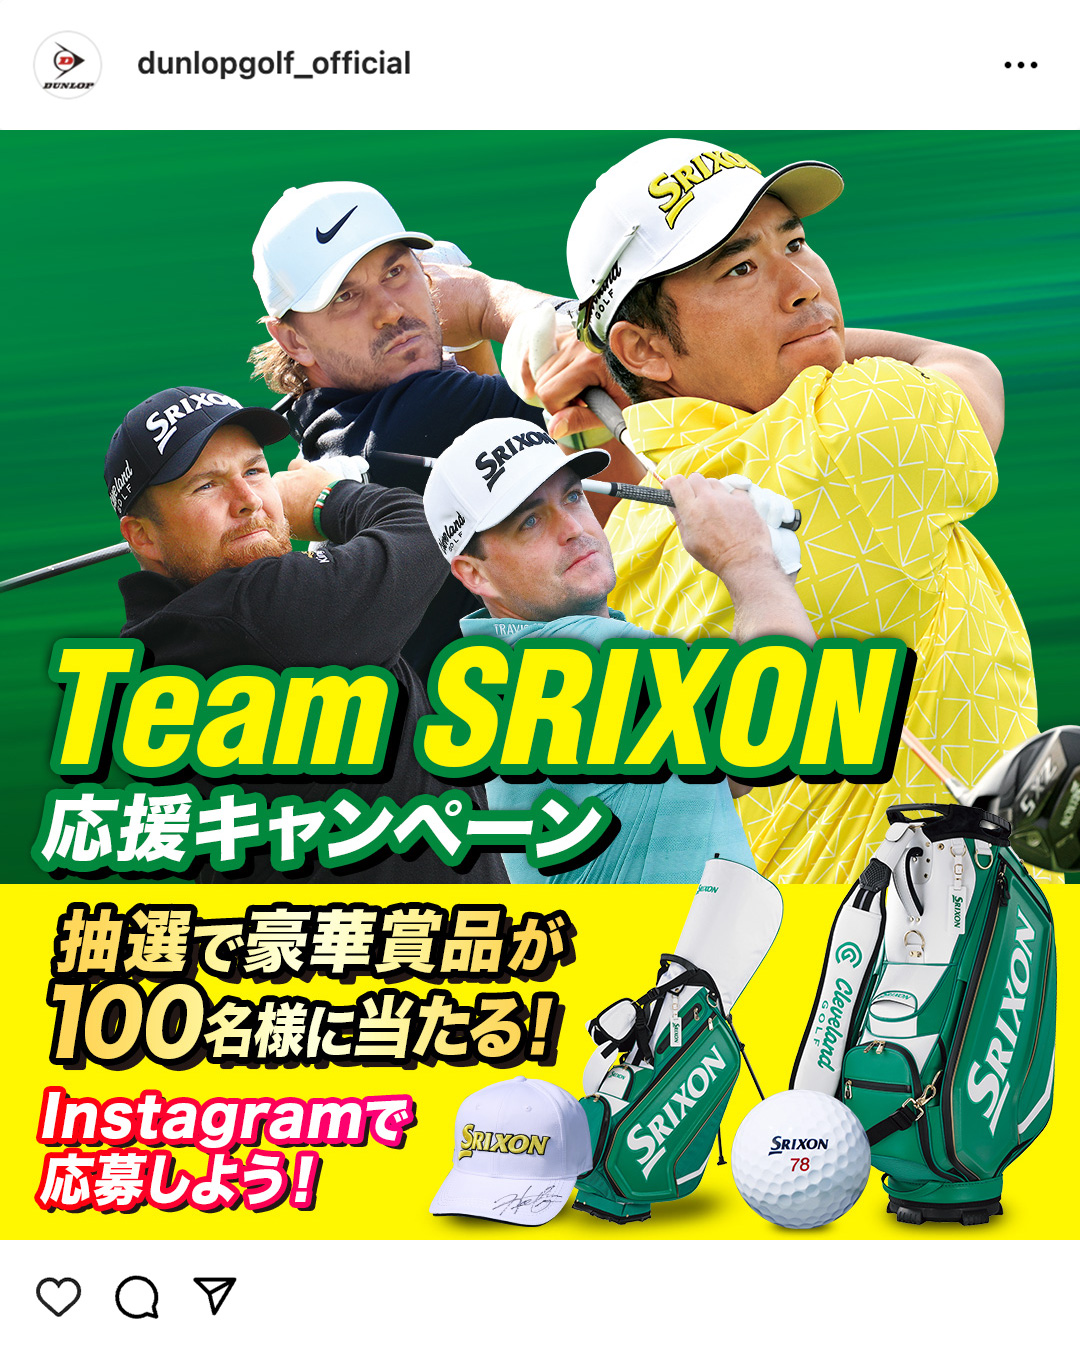 「Team SRIXON応援キャンペーン」